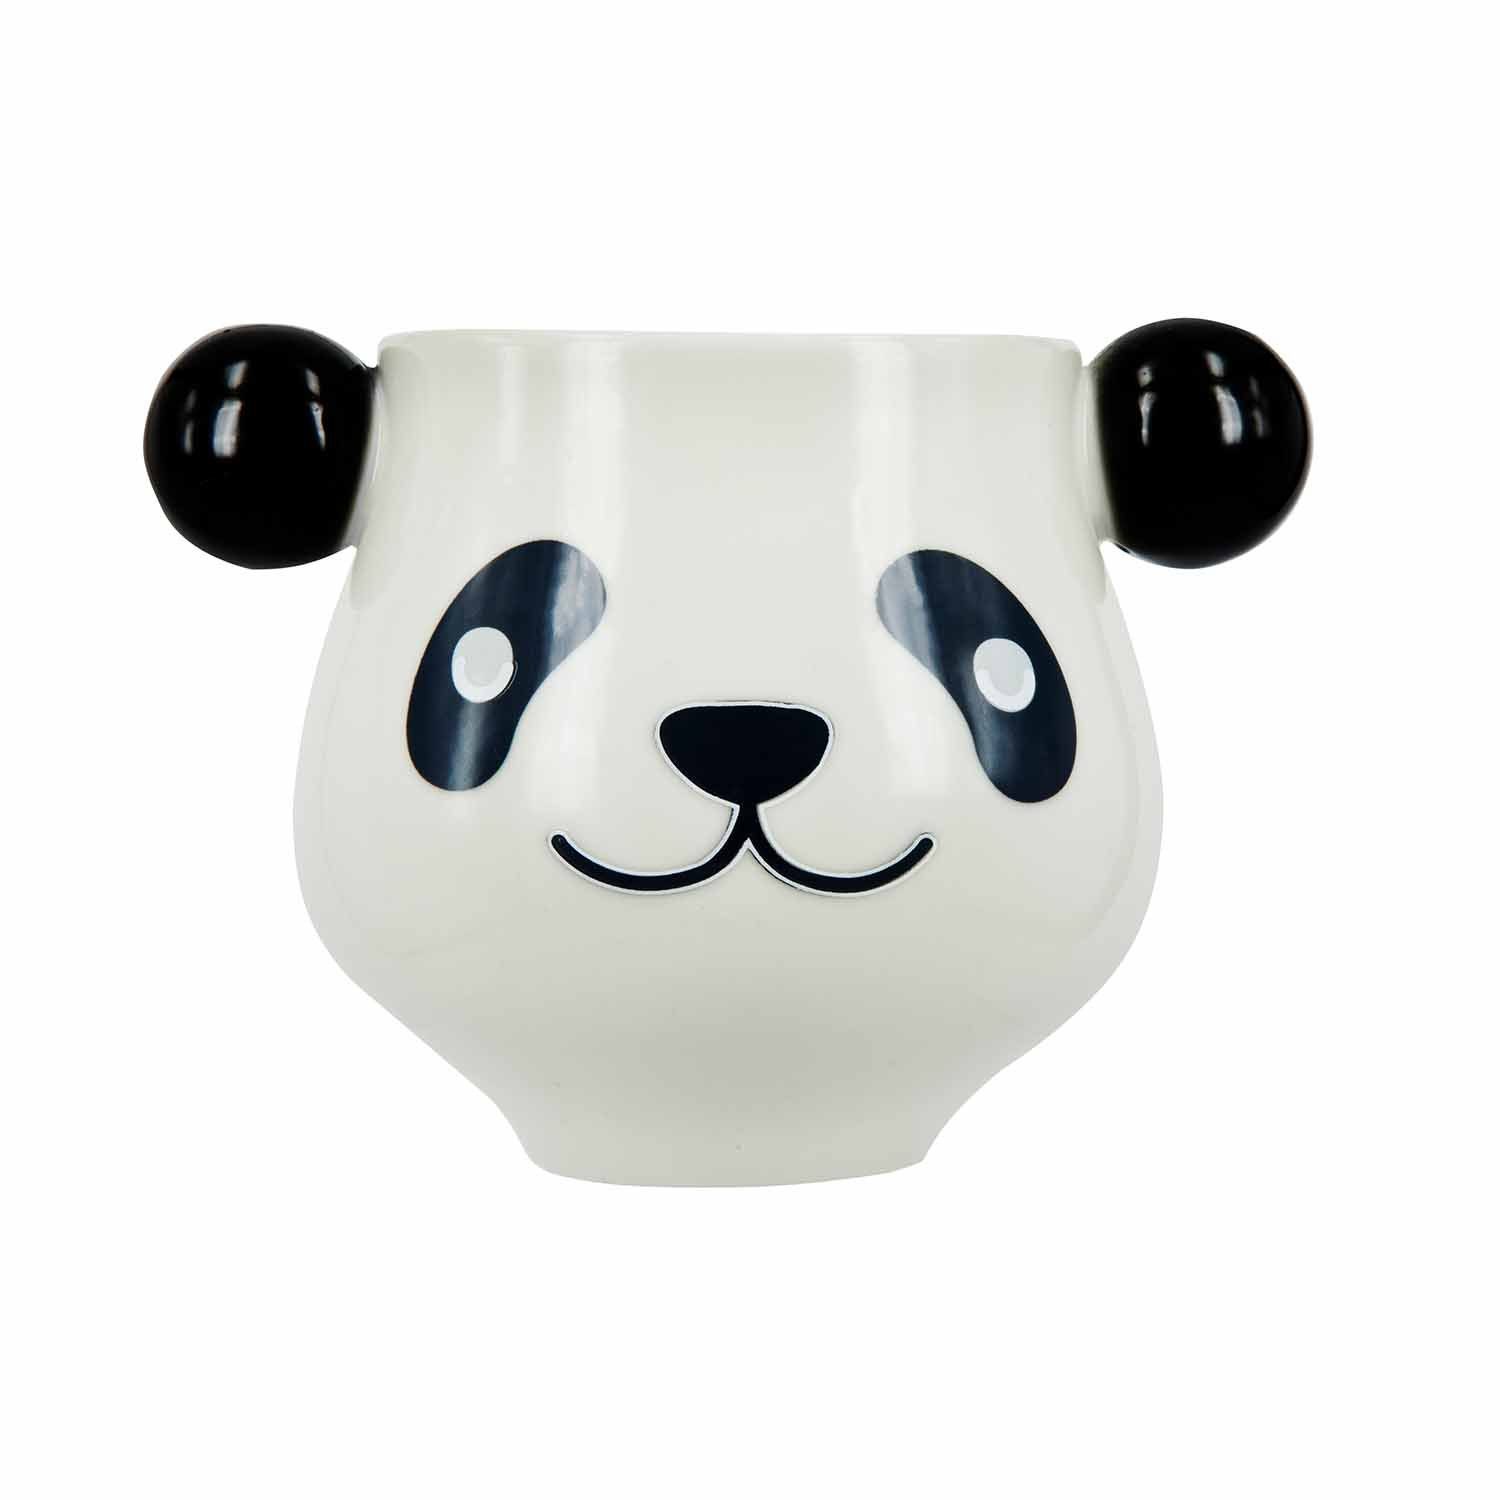 Thumbs Up Tasse "Panda Mug" - mit Farbwechsel, Farbwechseleffekt | Teetassen